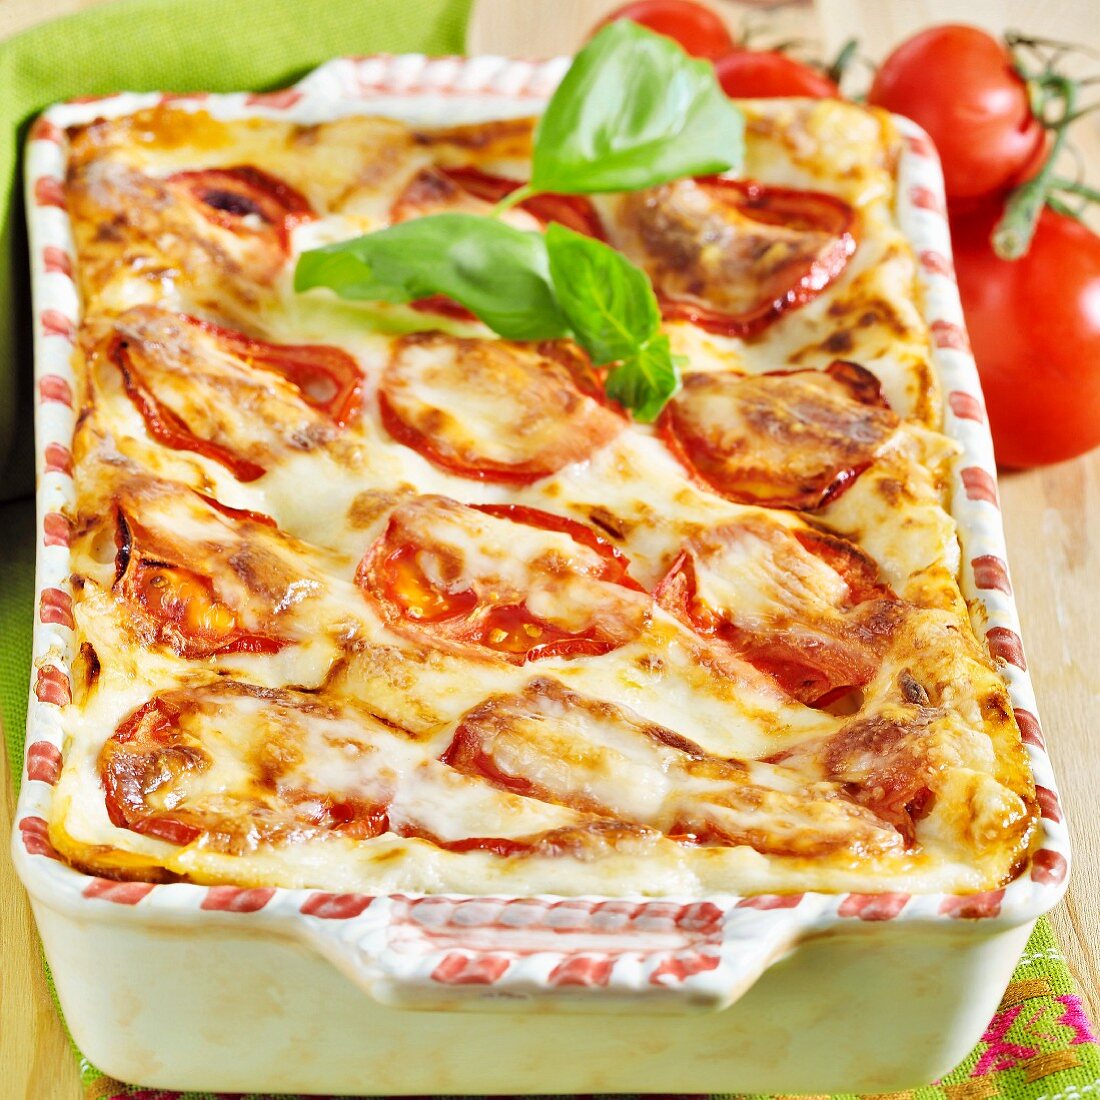 Vegetarian lasagne with tomatoes